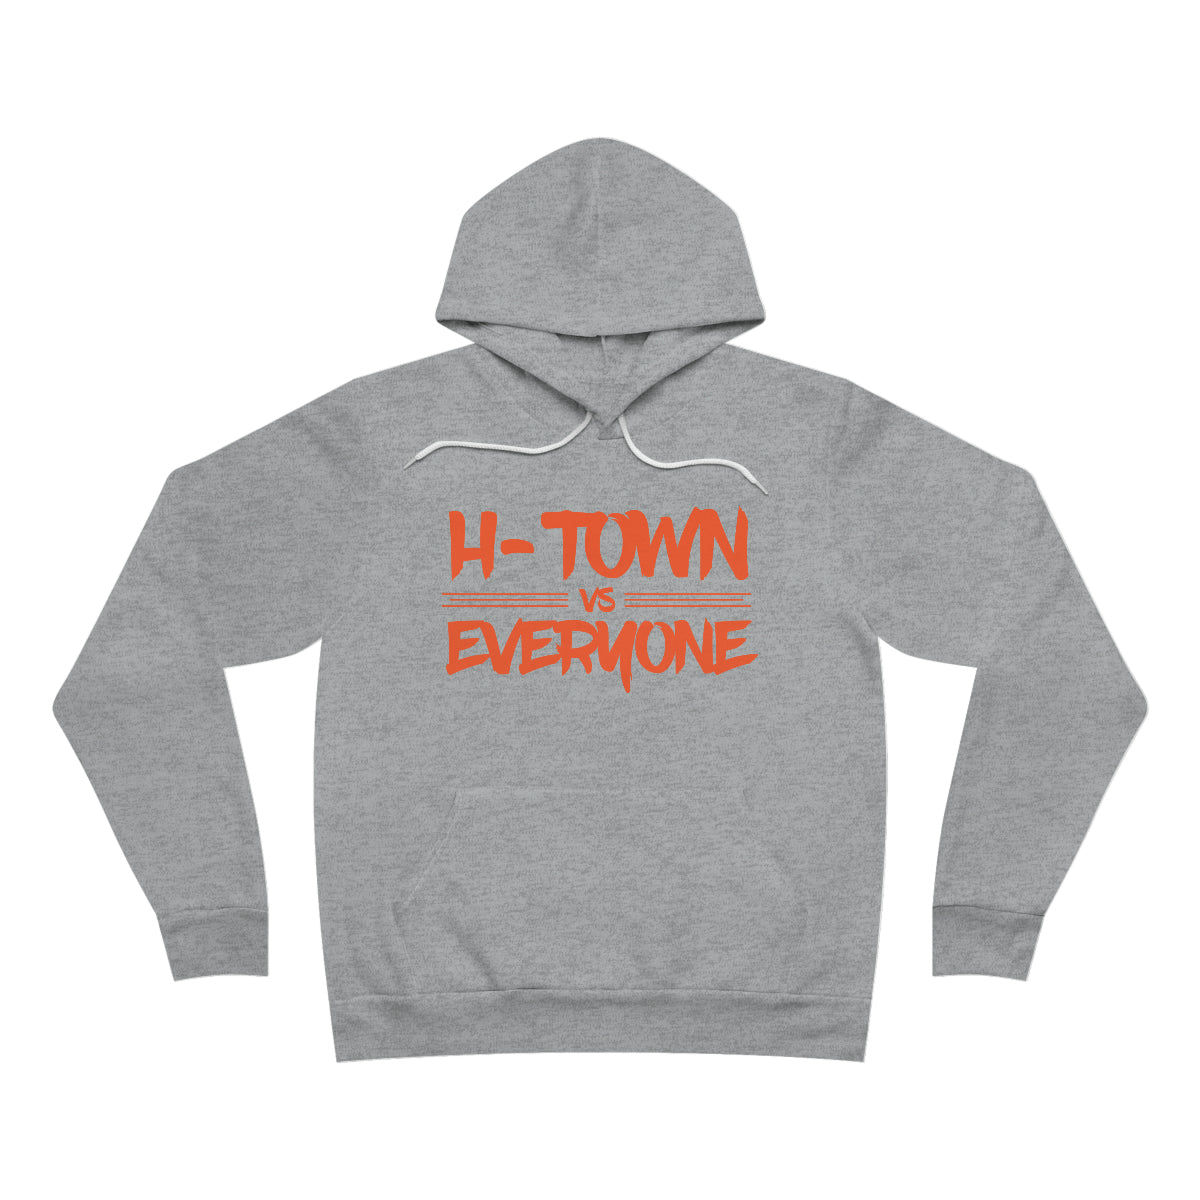 H-Town vs Everyone (Orange Design) Unisex Sponge Fleece Premium Pullover Hoodie